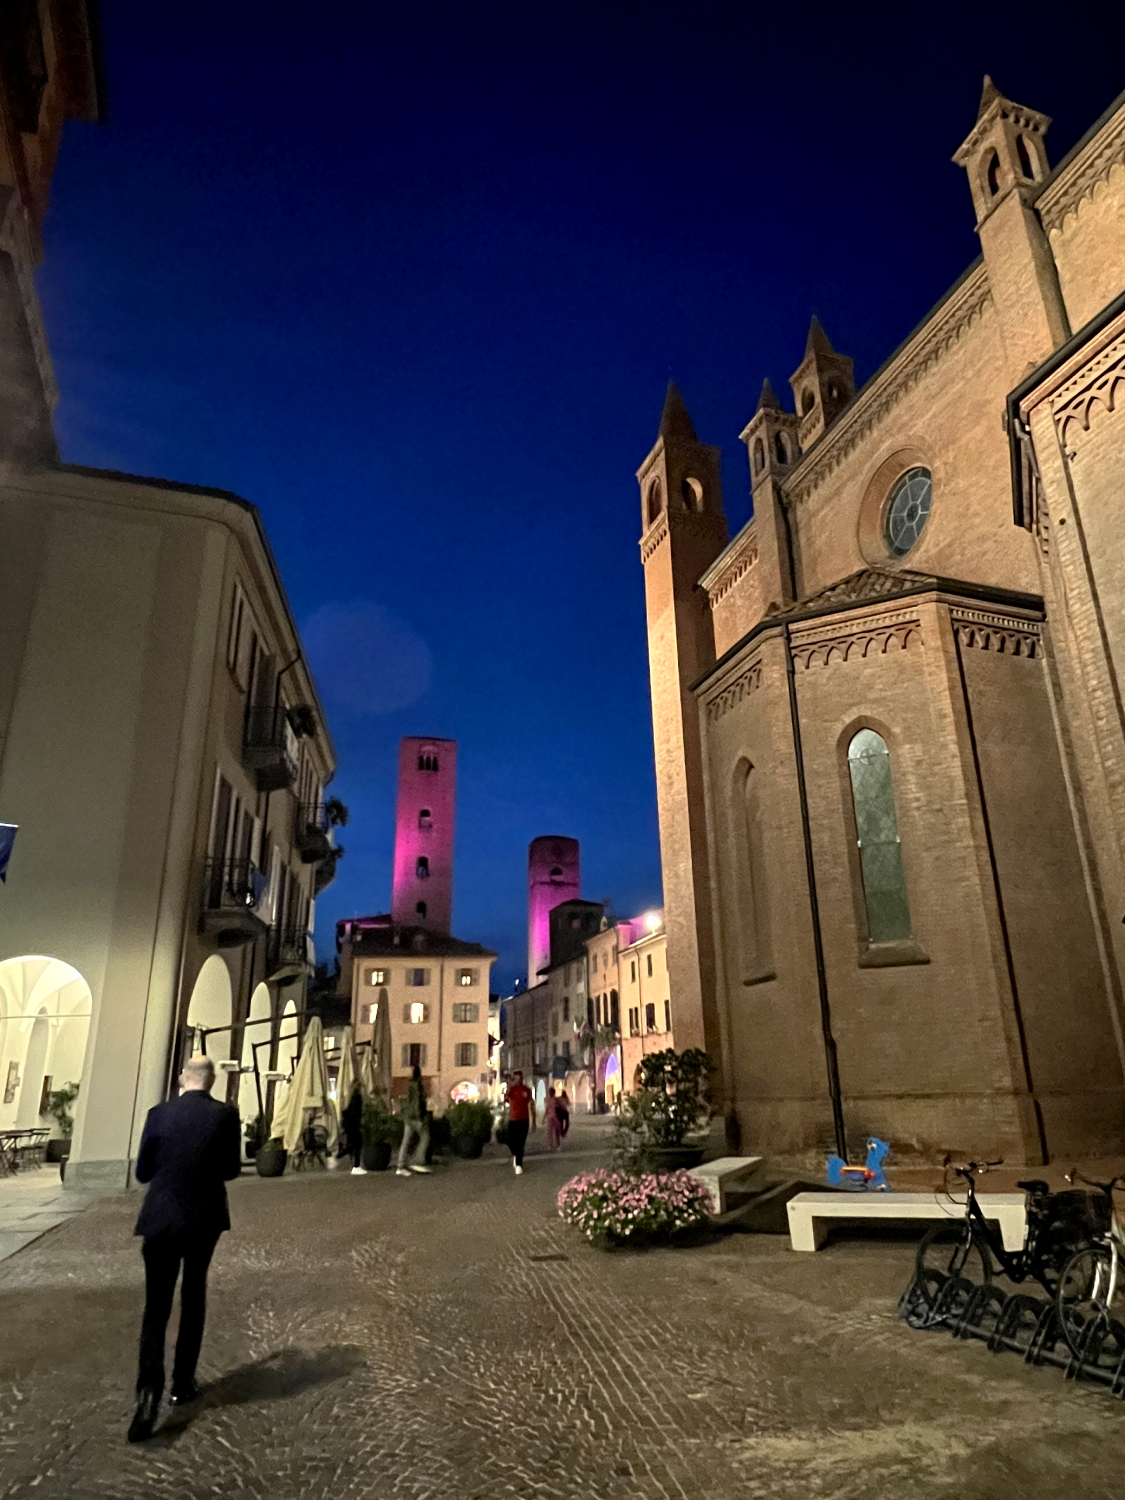 The actual Piazza Duomo in Alba